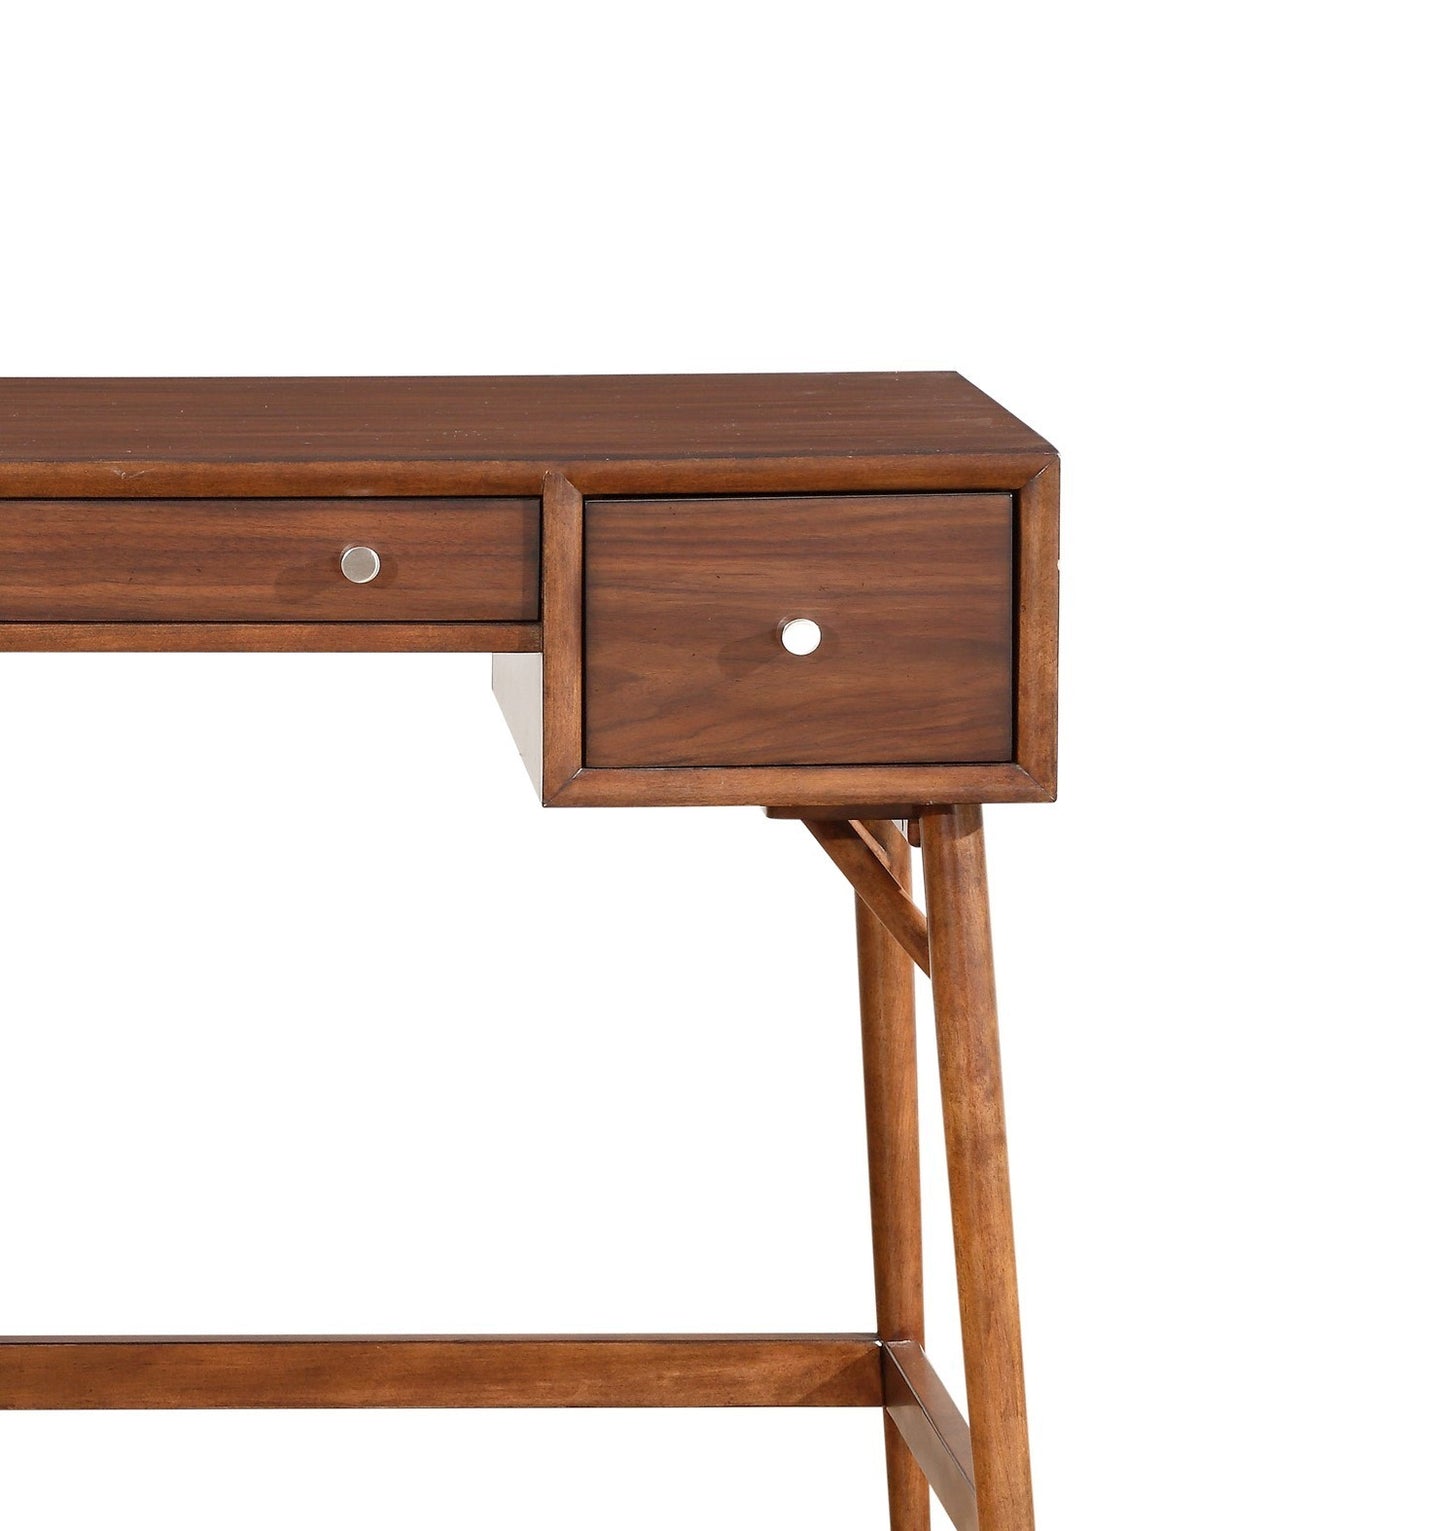 Elegant Walnut Veneer Writing Desk with Counter Height Design